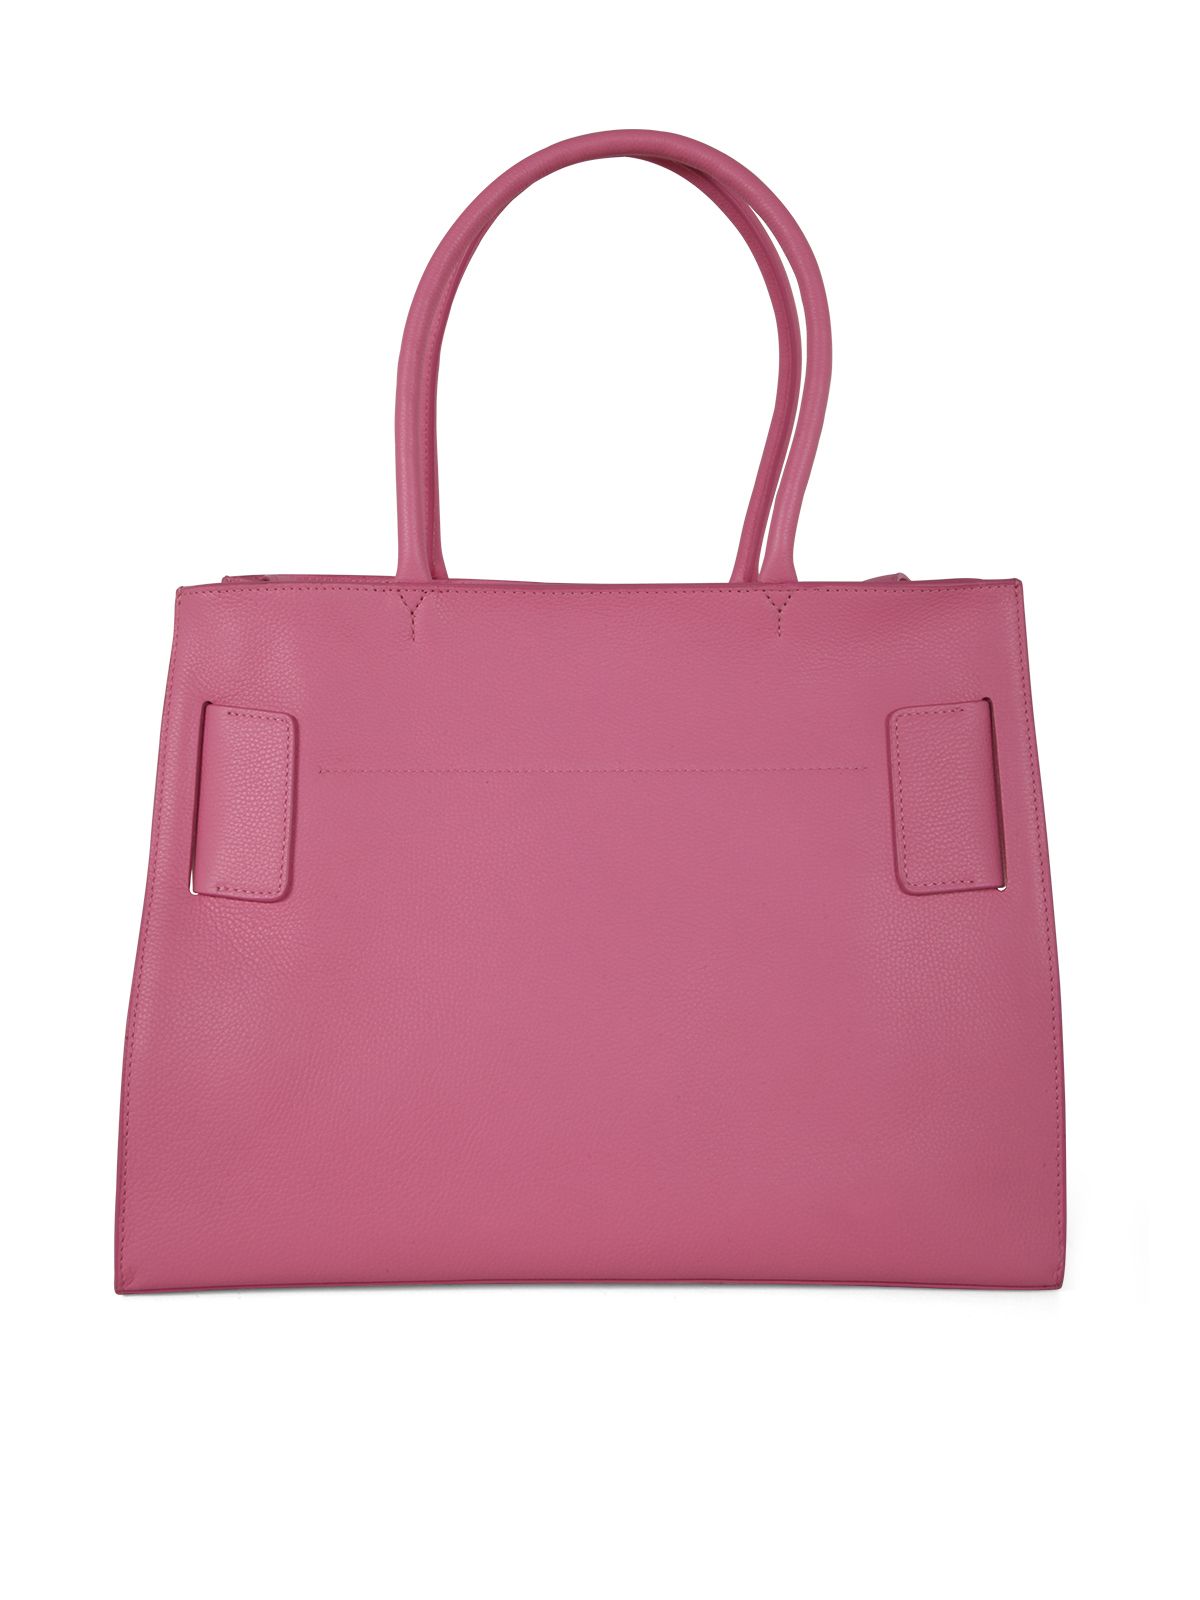 Shop Boyy Women's Leather Bags: Bobby Soft Bag